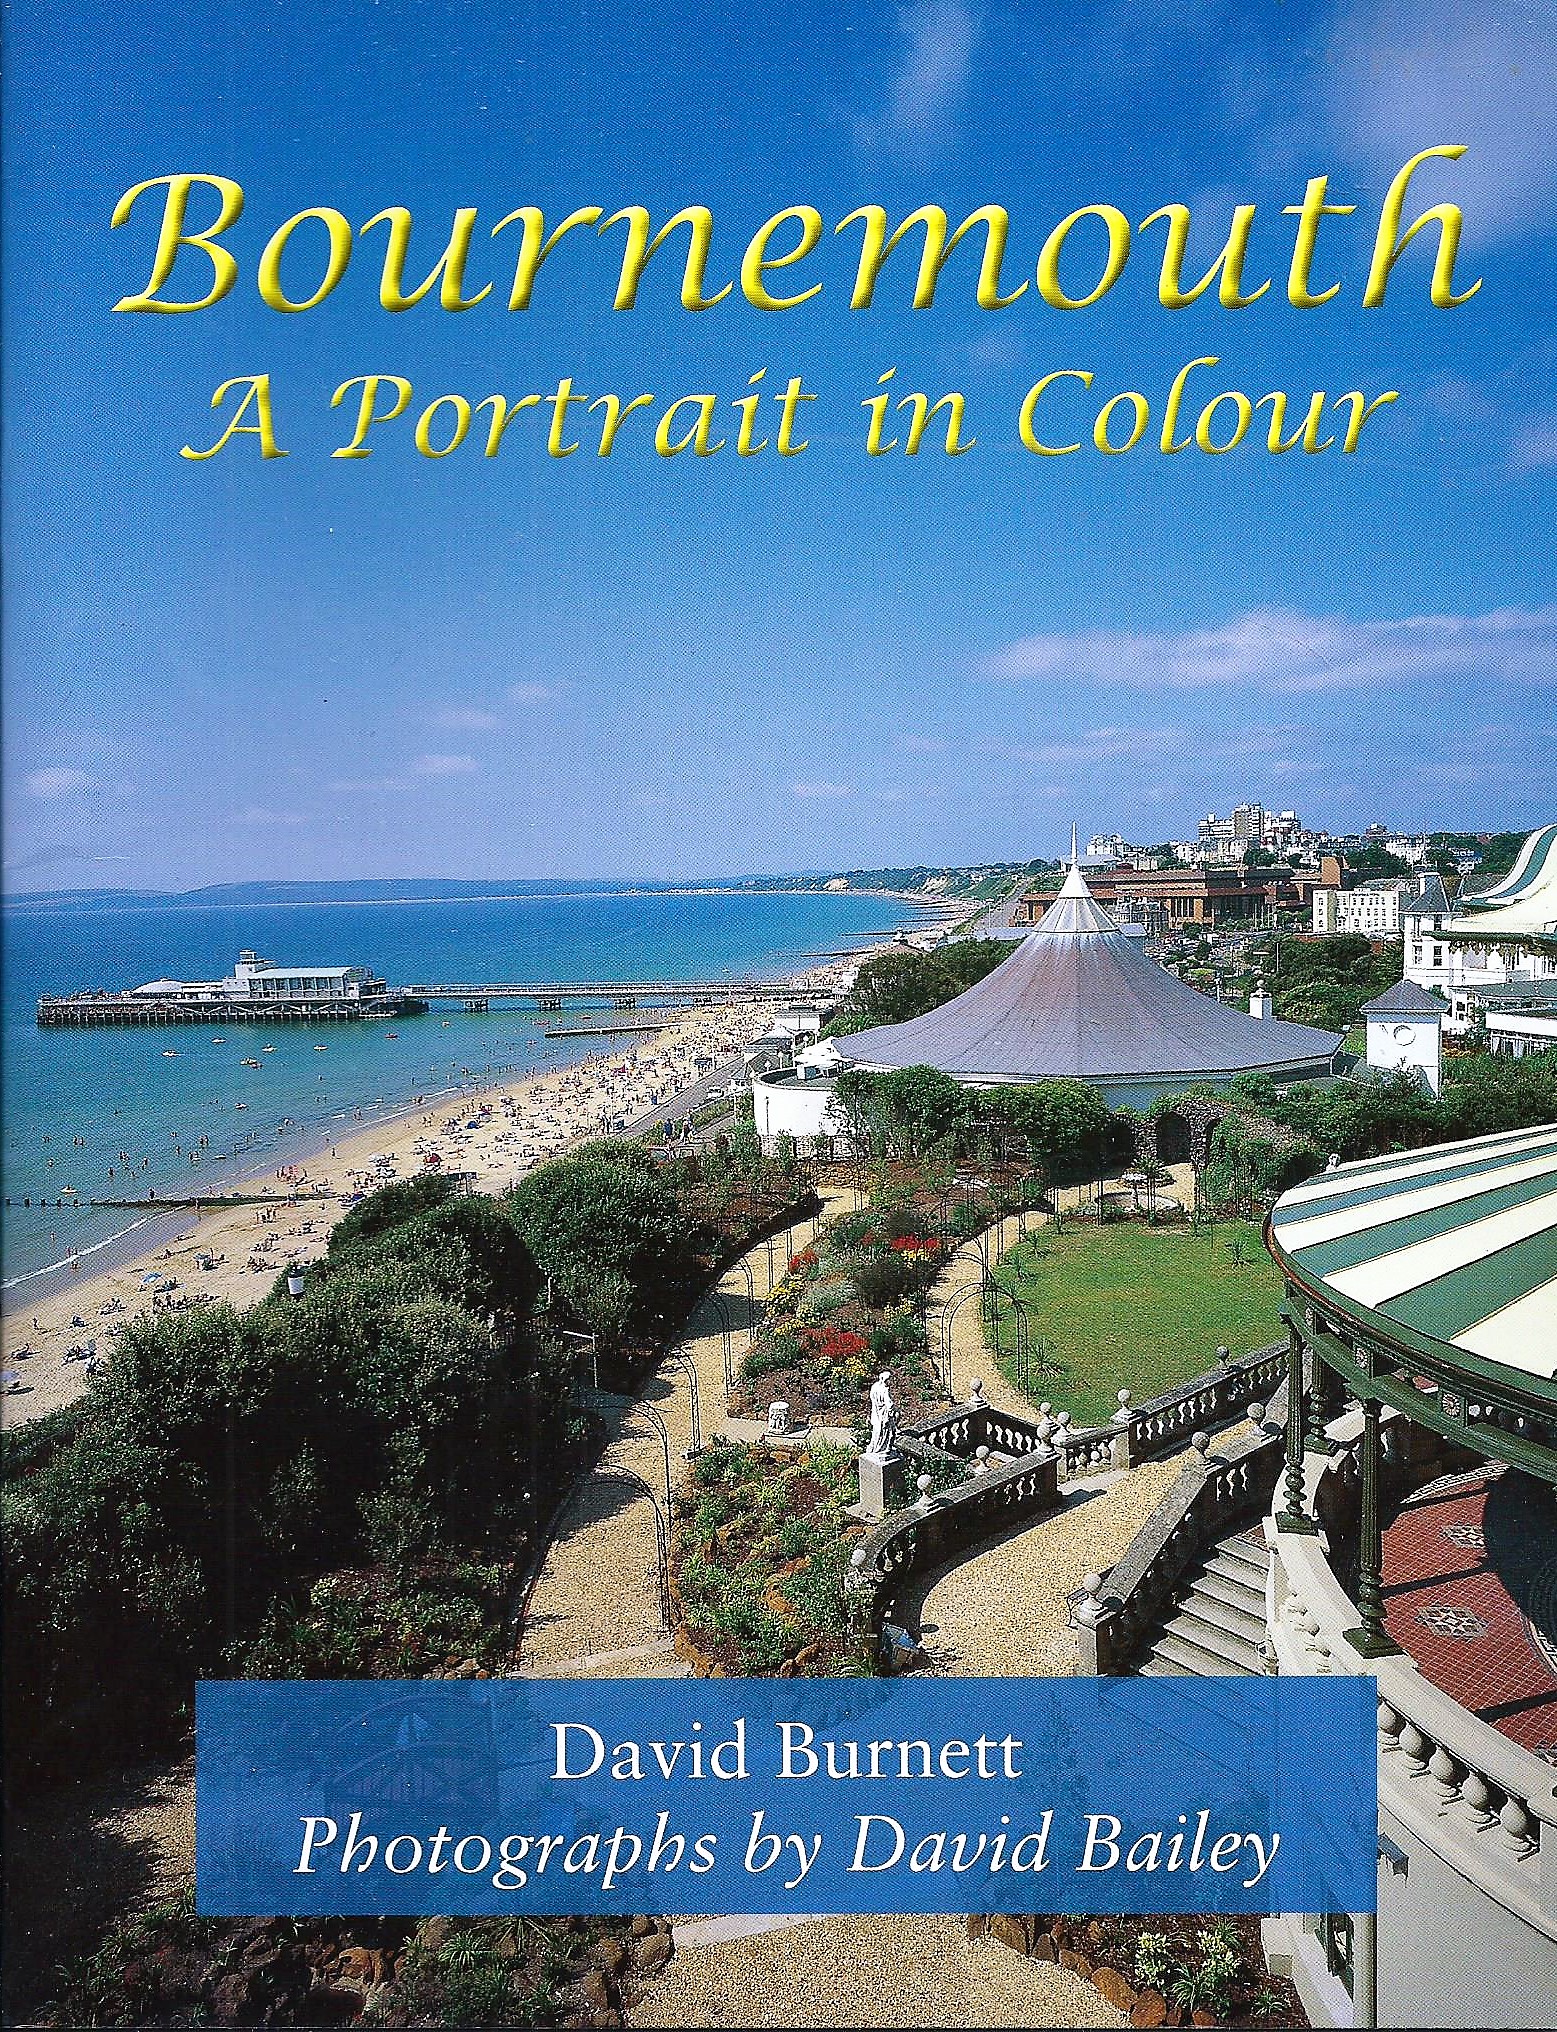 Bournemouth; A Portrait in Colour - Burnett, David; Bailey, David, Photographs